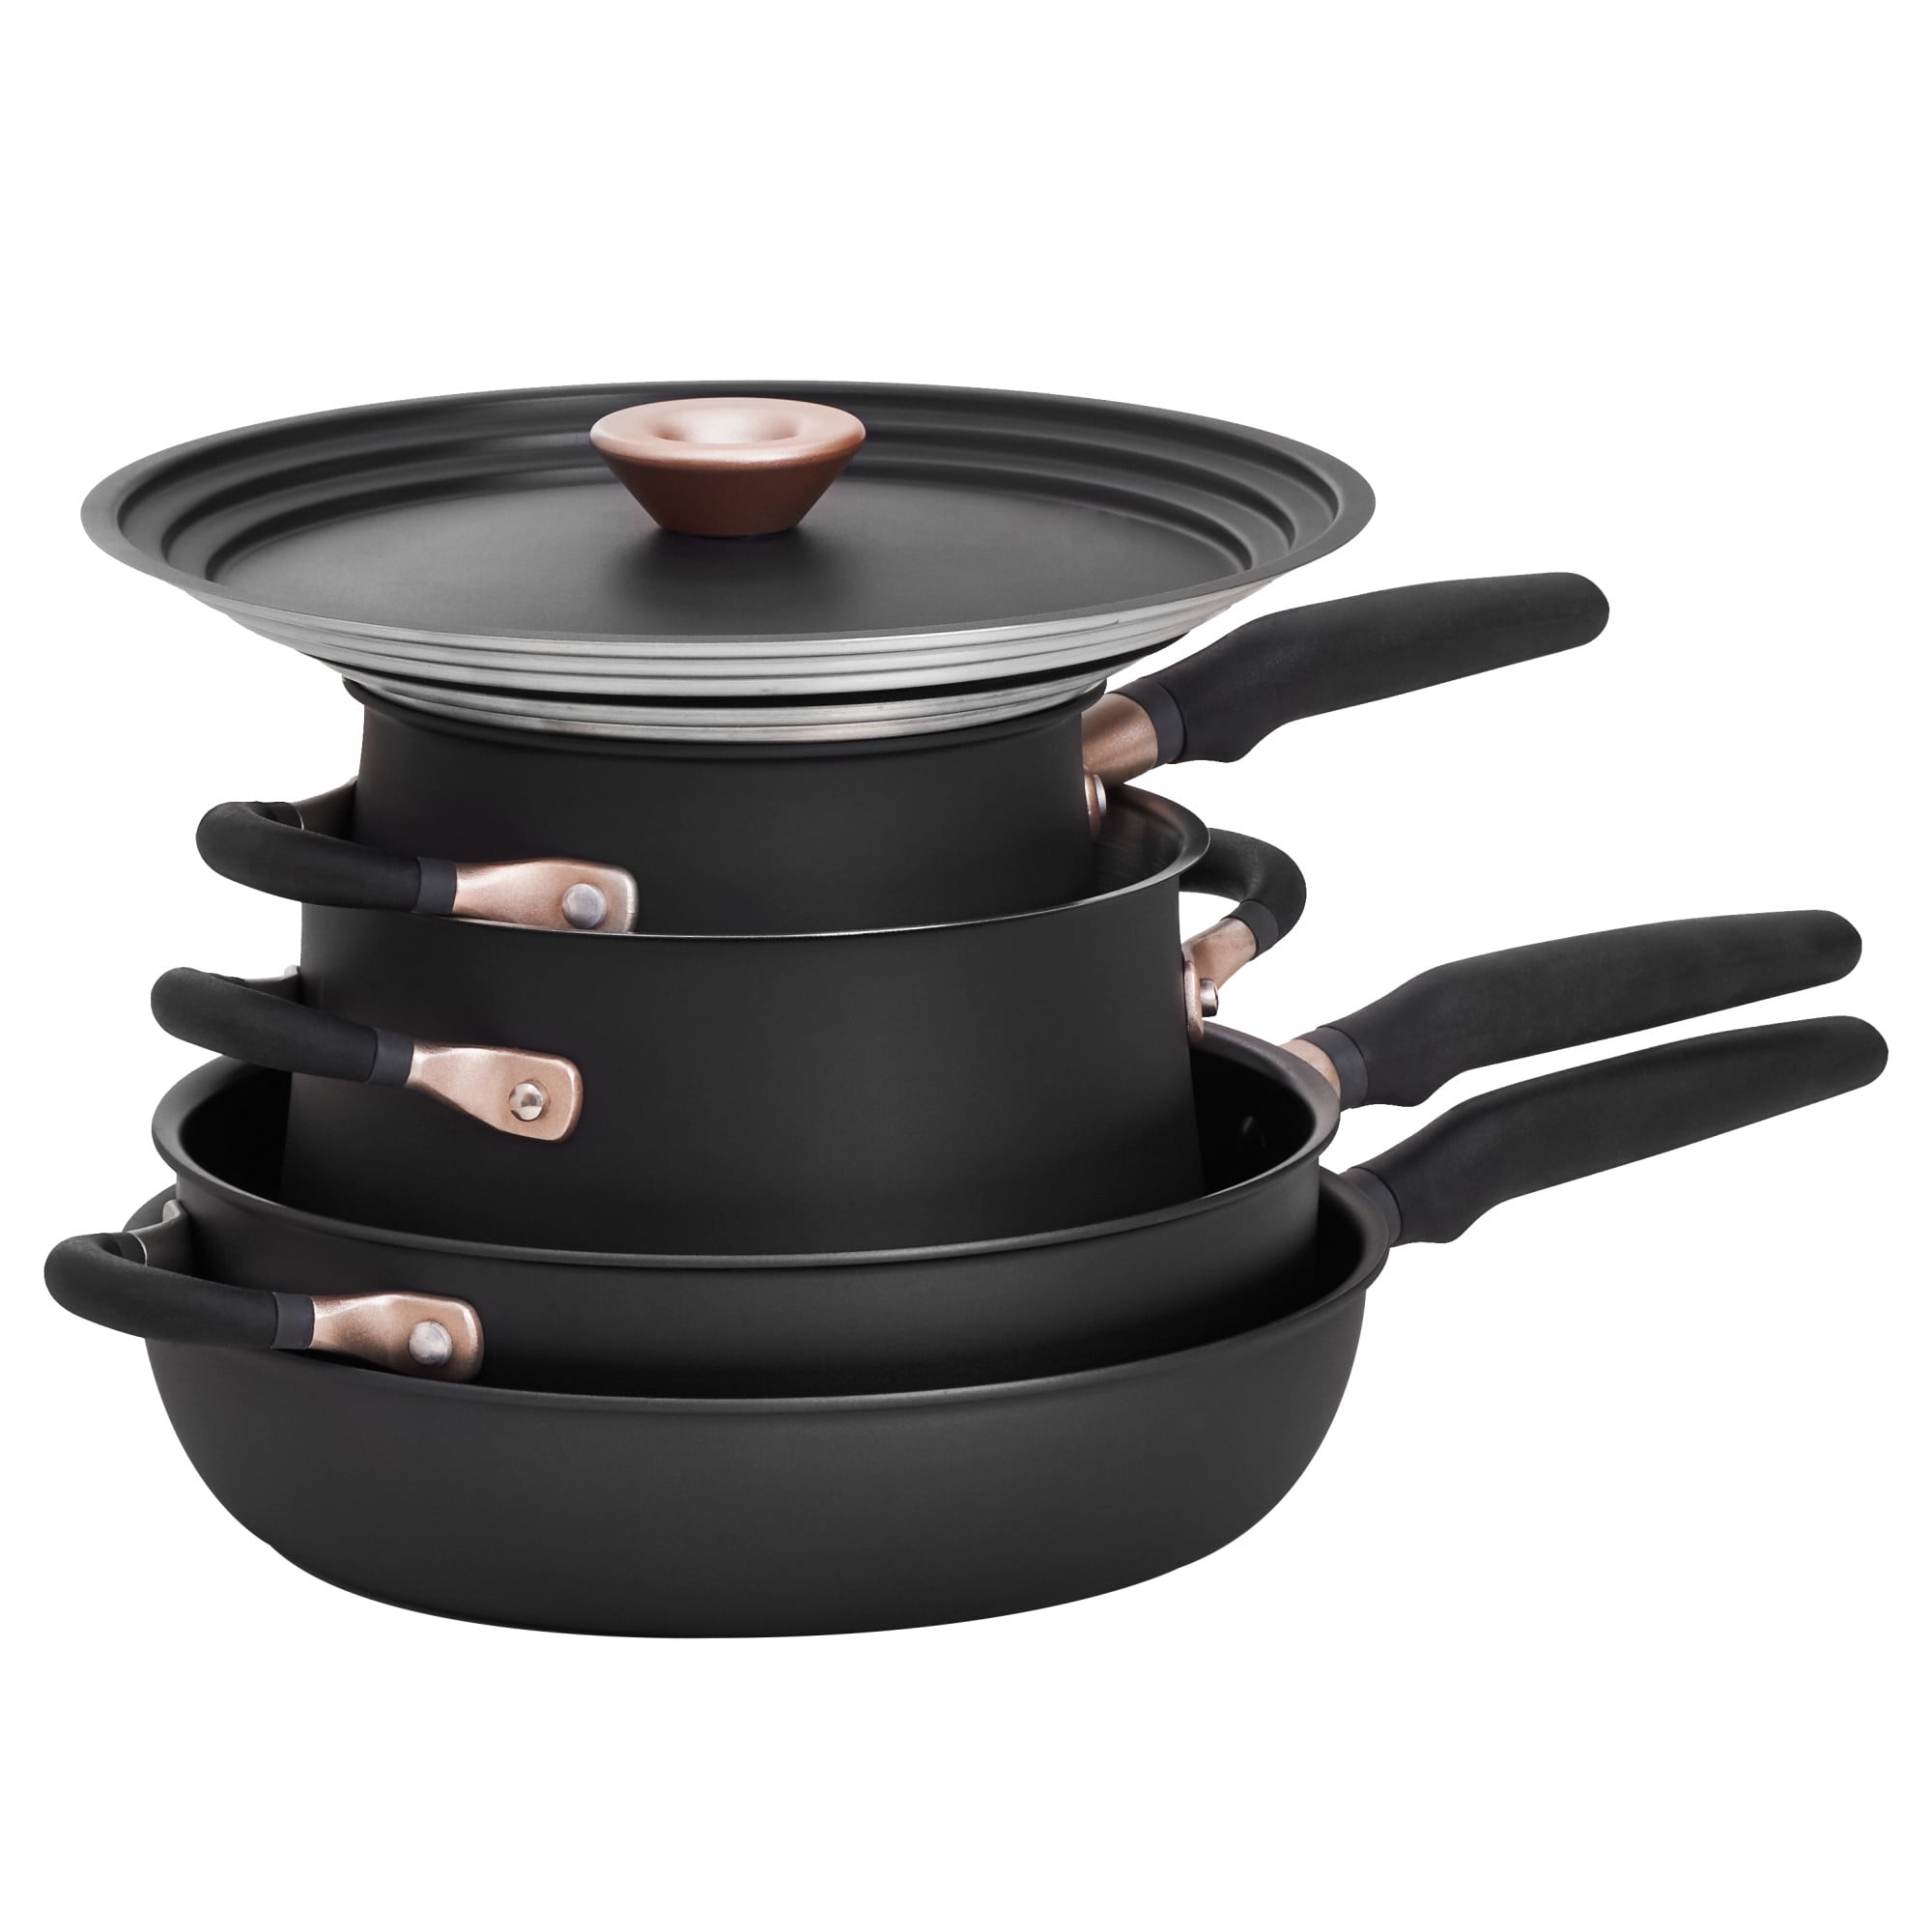 Belgique + Stackable 10-Pc. Stainless Steel Cookware Set